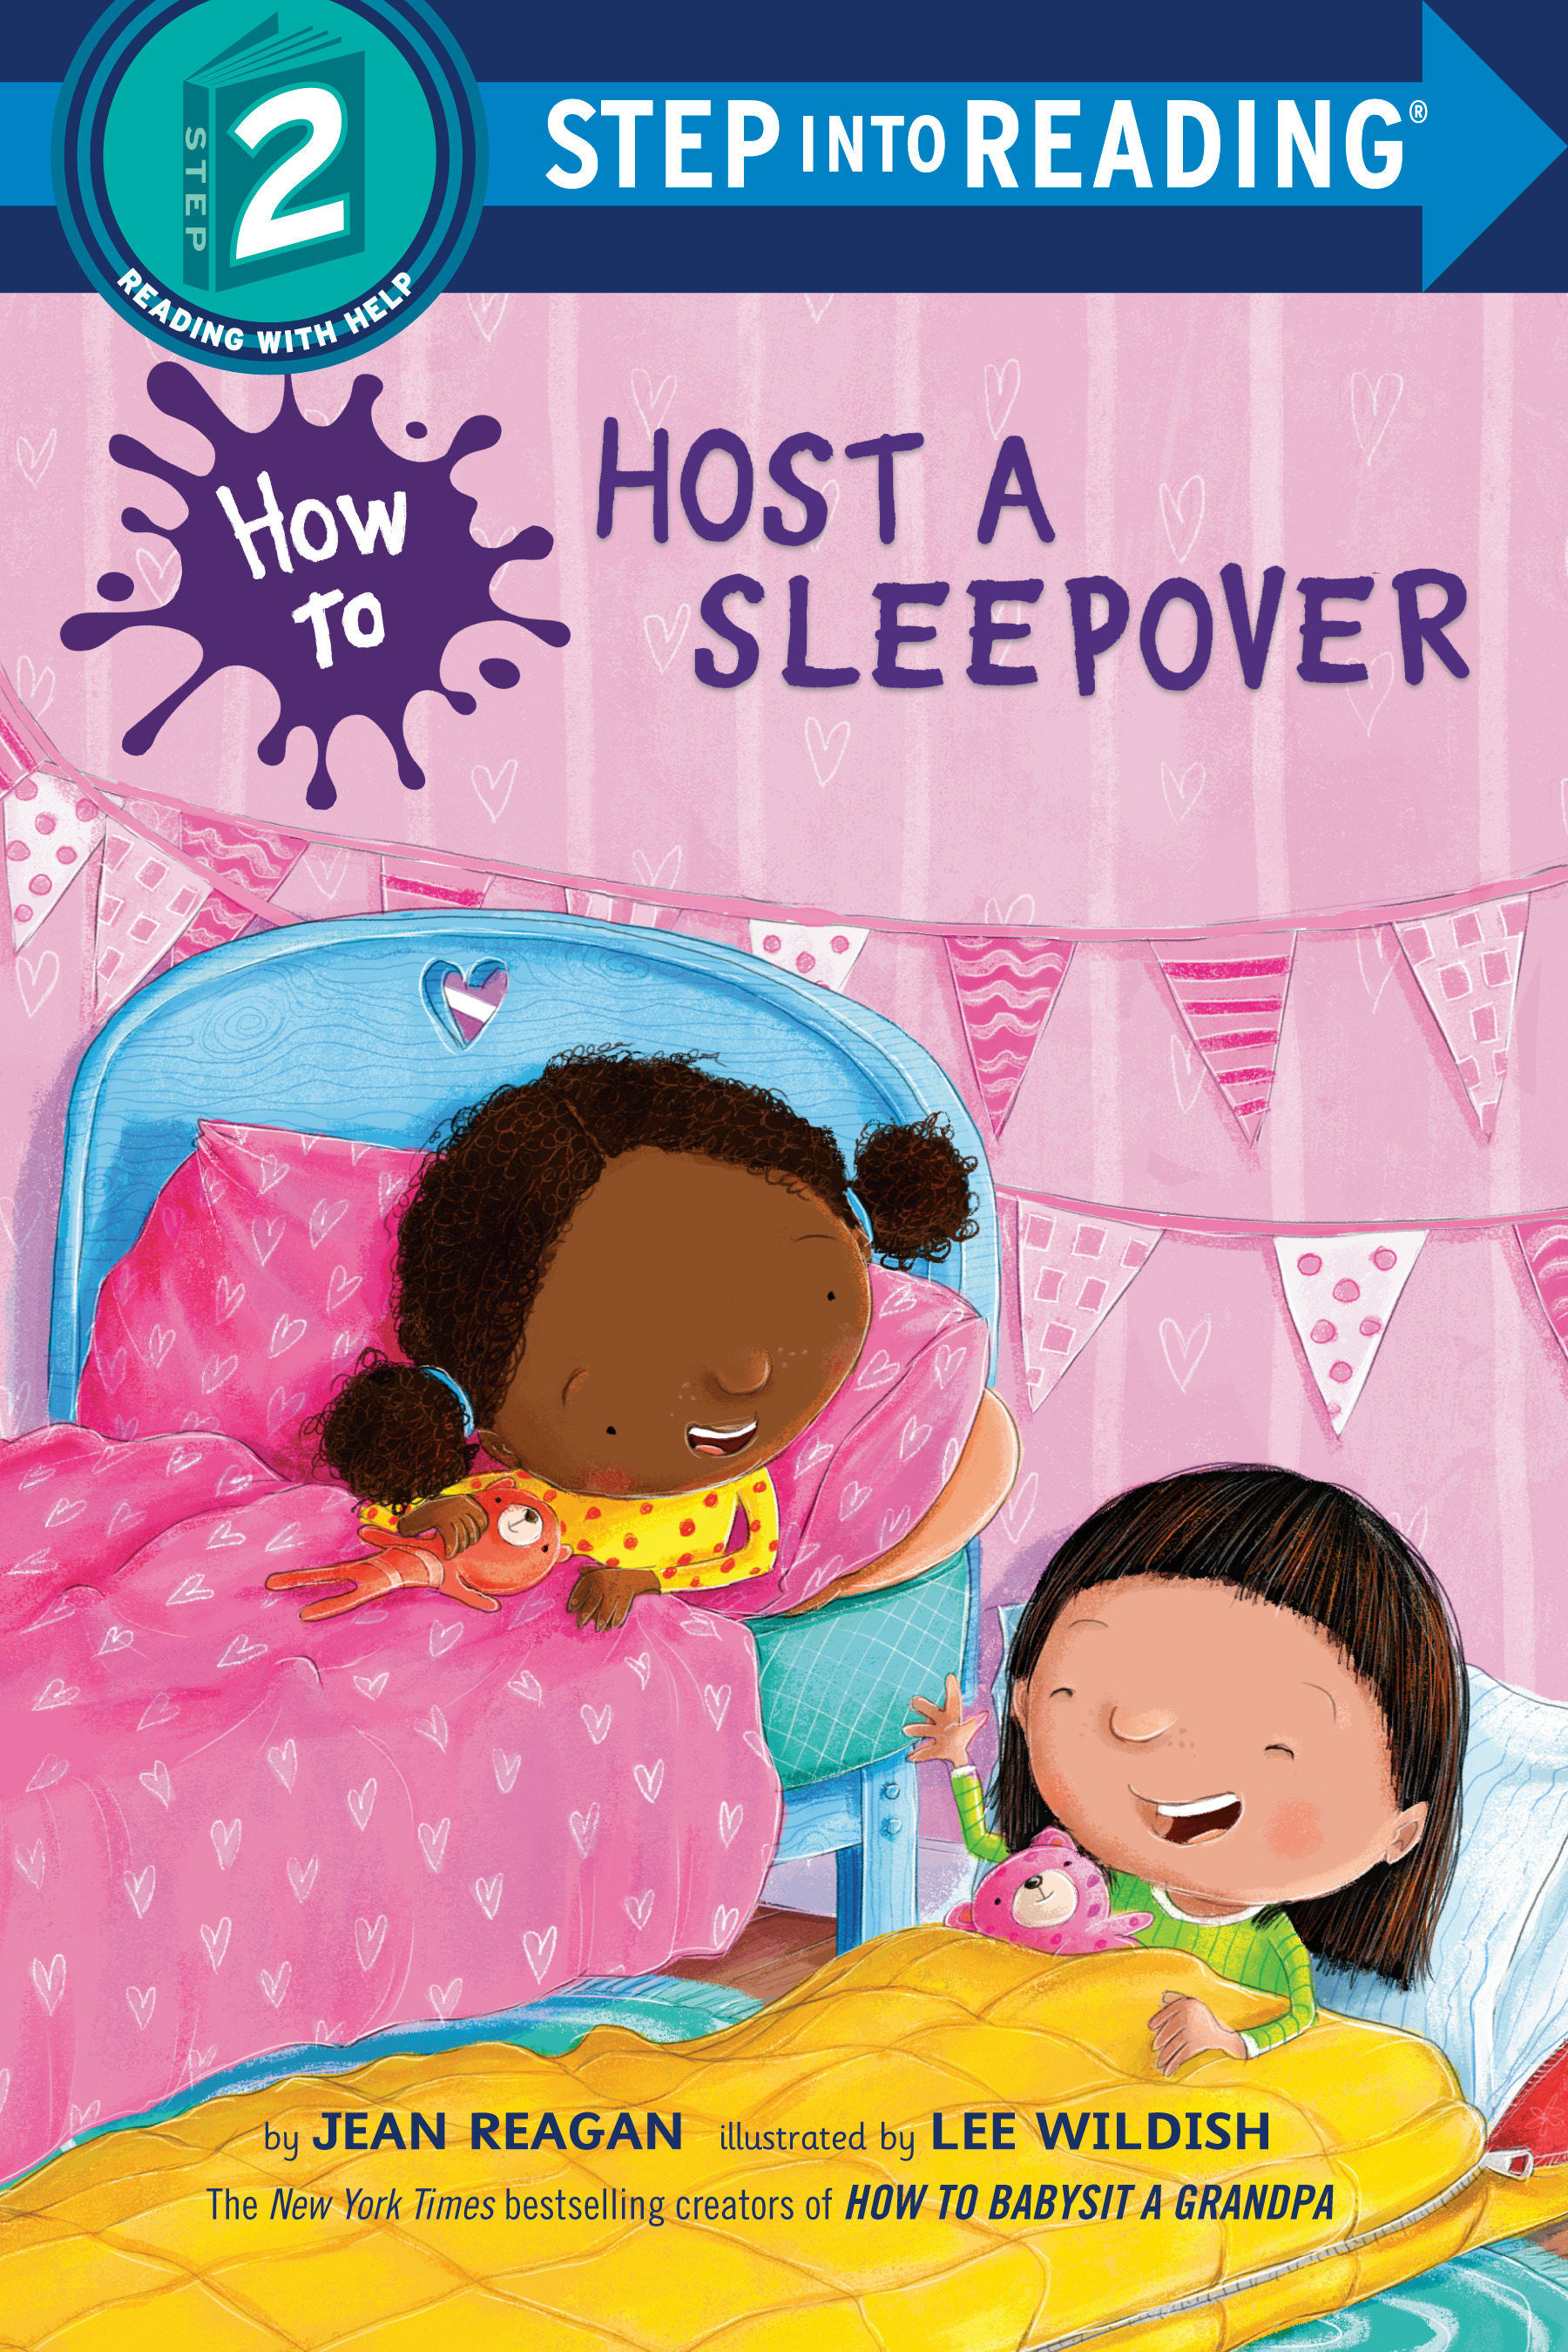 How to Host a Sleepover | Reagan, Jean